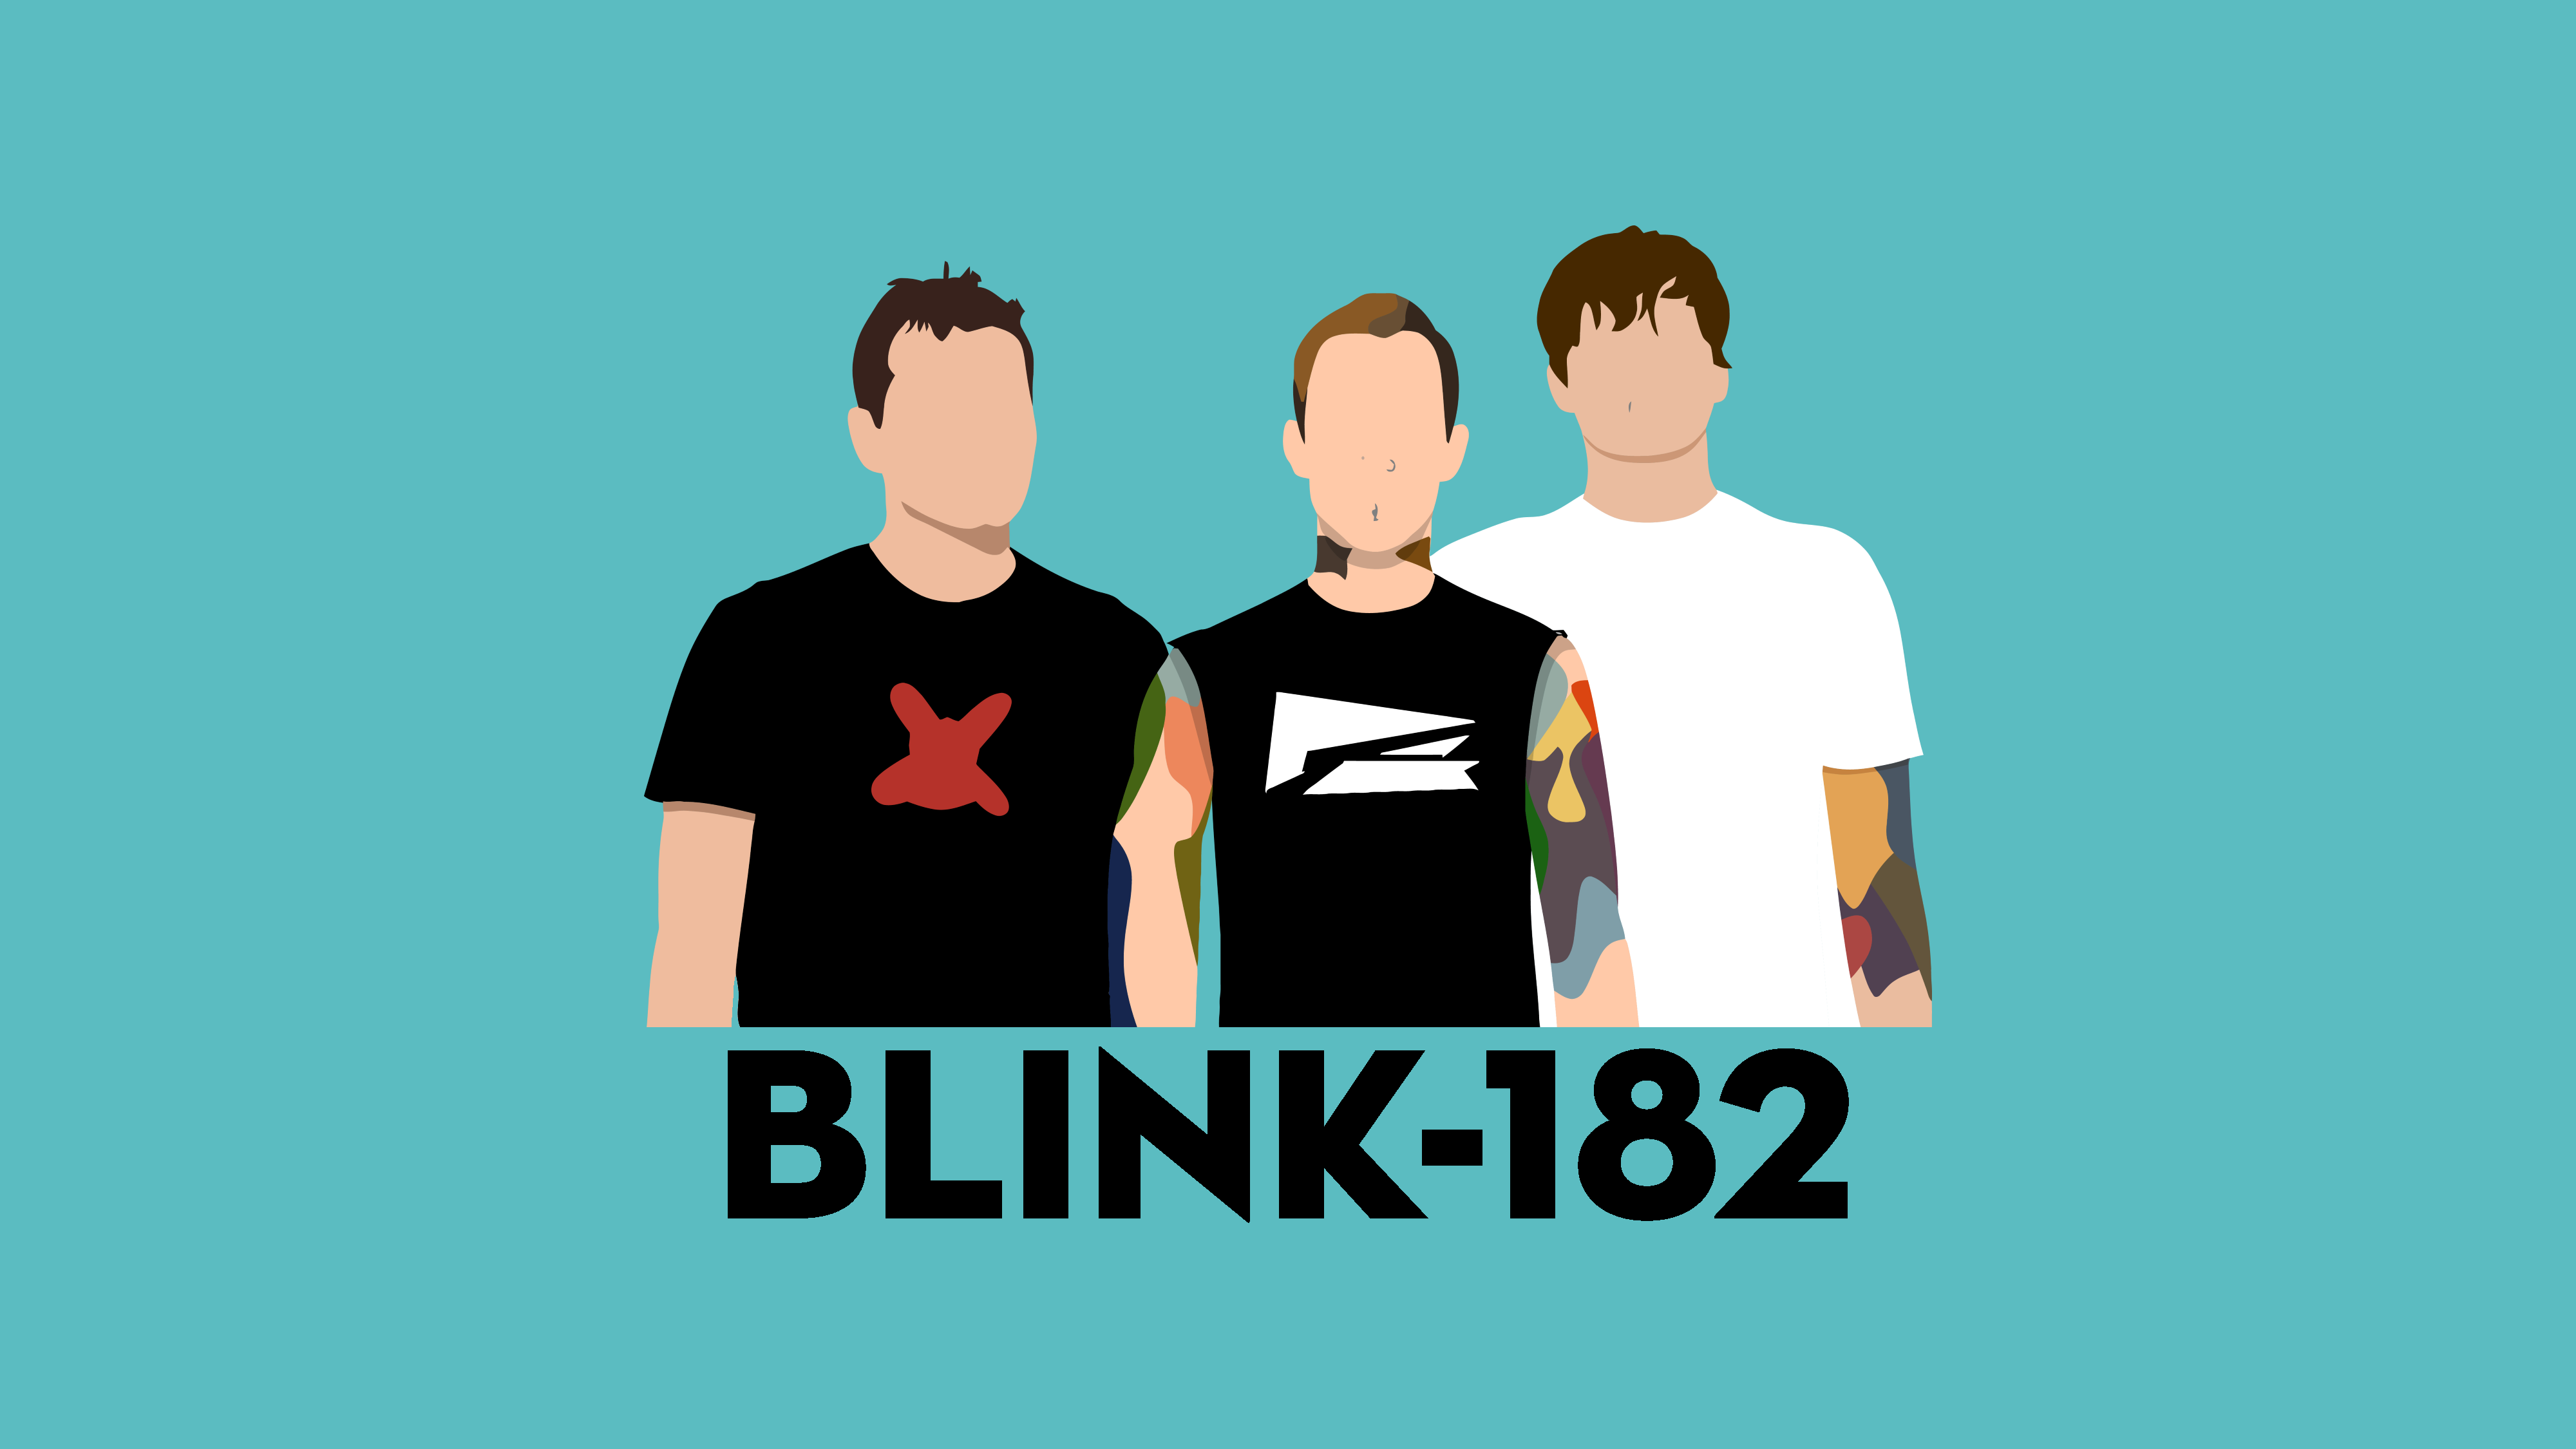 I Made A Minimalistic Blink Wallpaper Enjoy Blink182